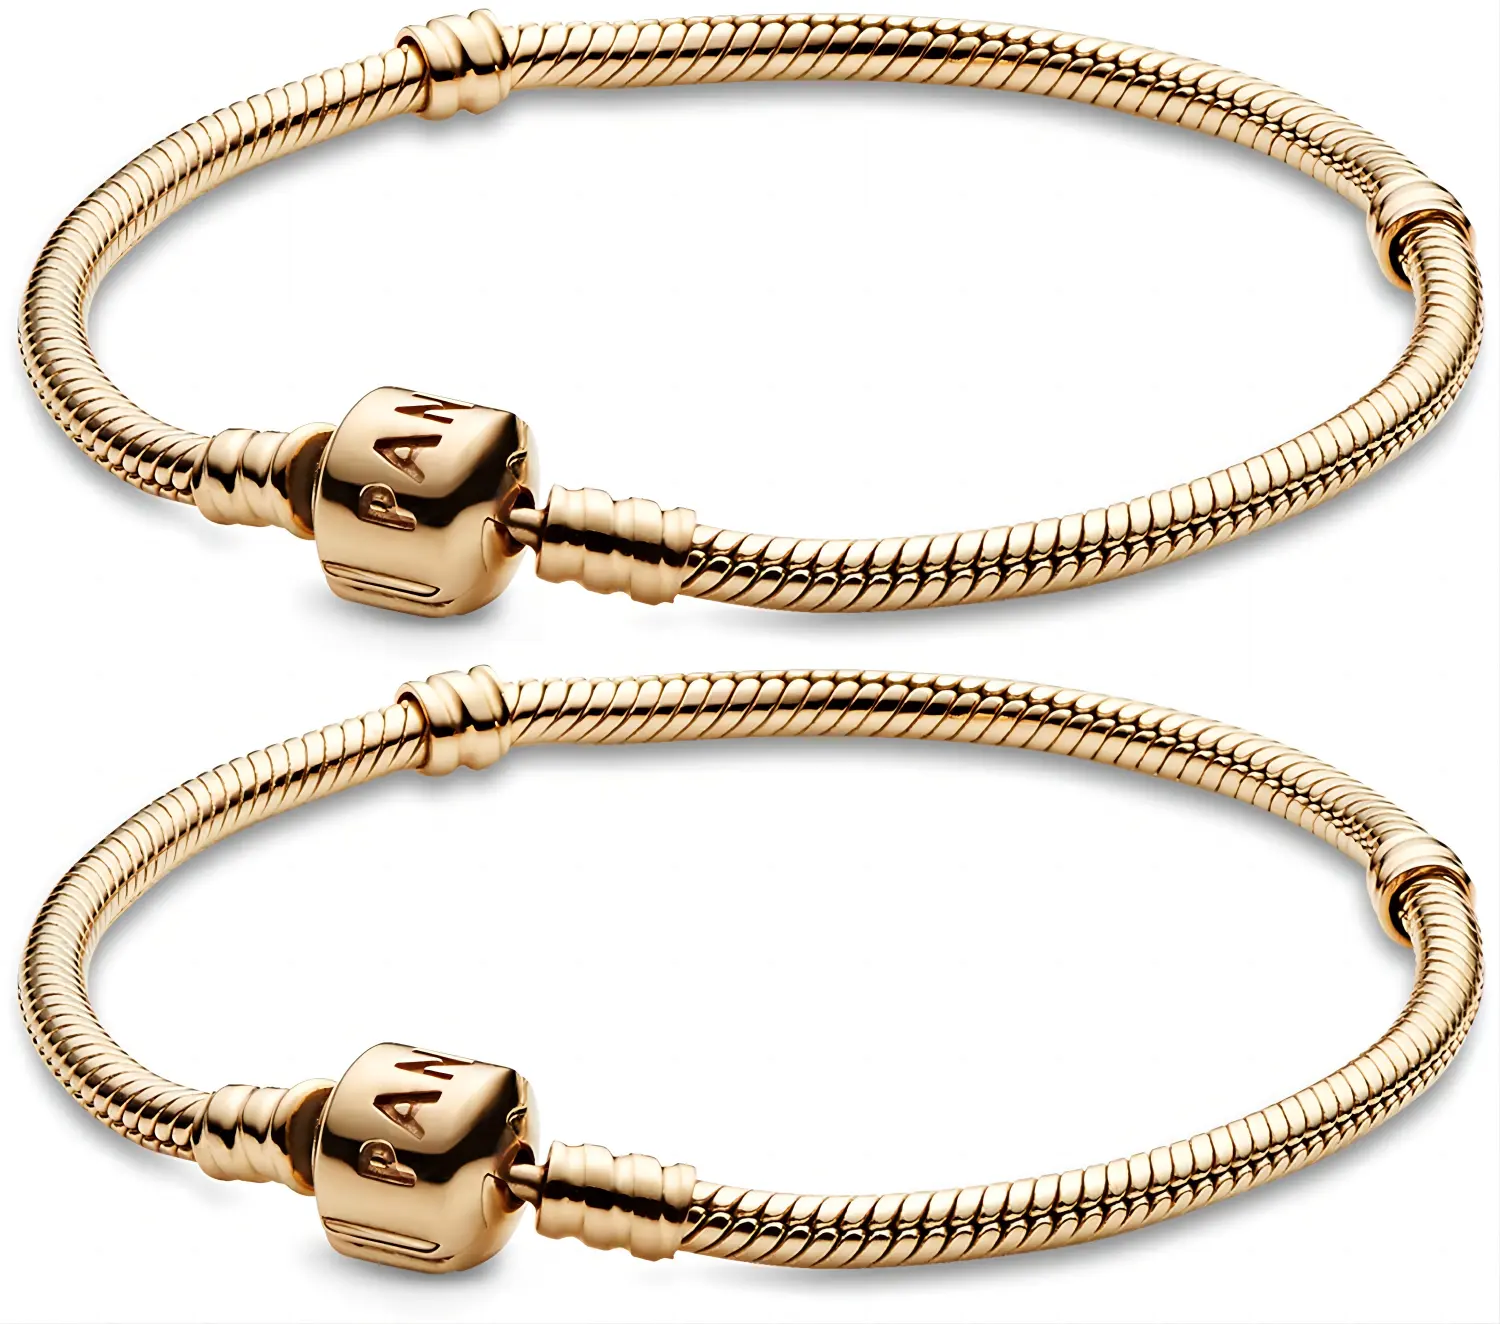 Personalized Gold Filled Snake 925 Silver Women's Friendship Charm Men Couple Fashion Jewelry Bracelets Bangles For Pandora